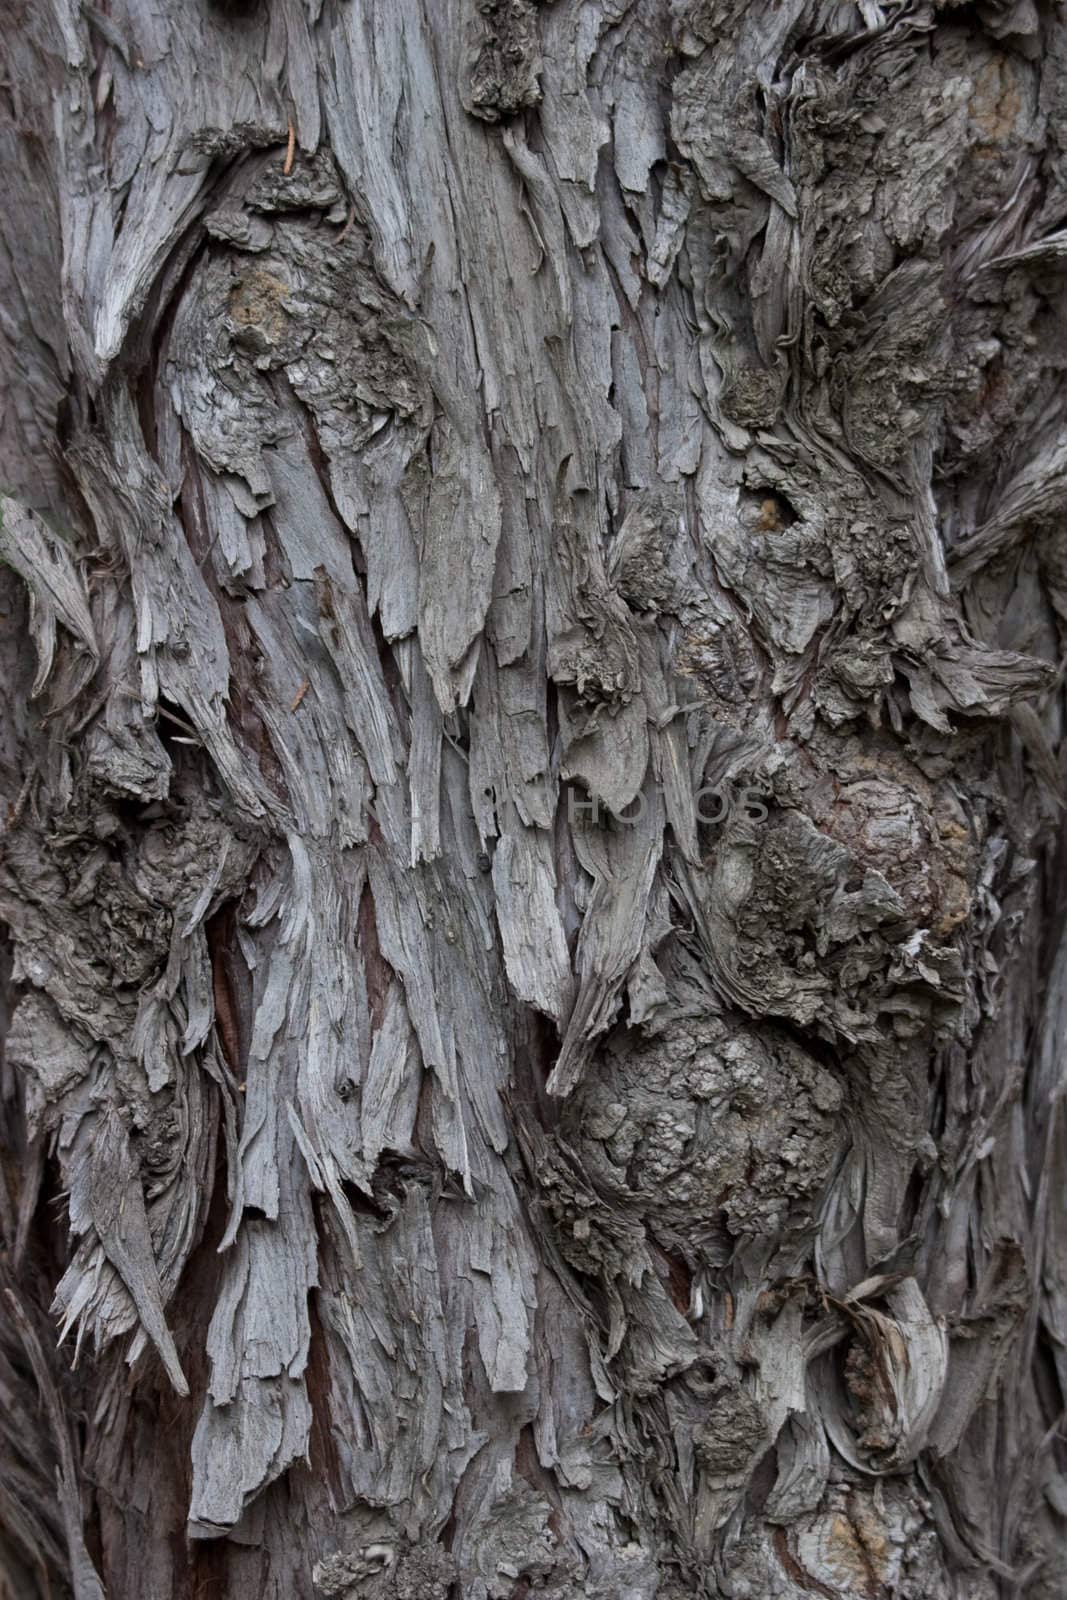 Rough Tree Bark by kwick52